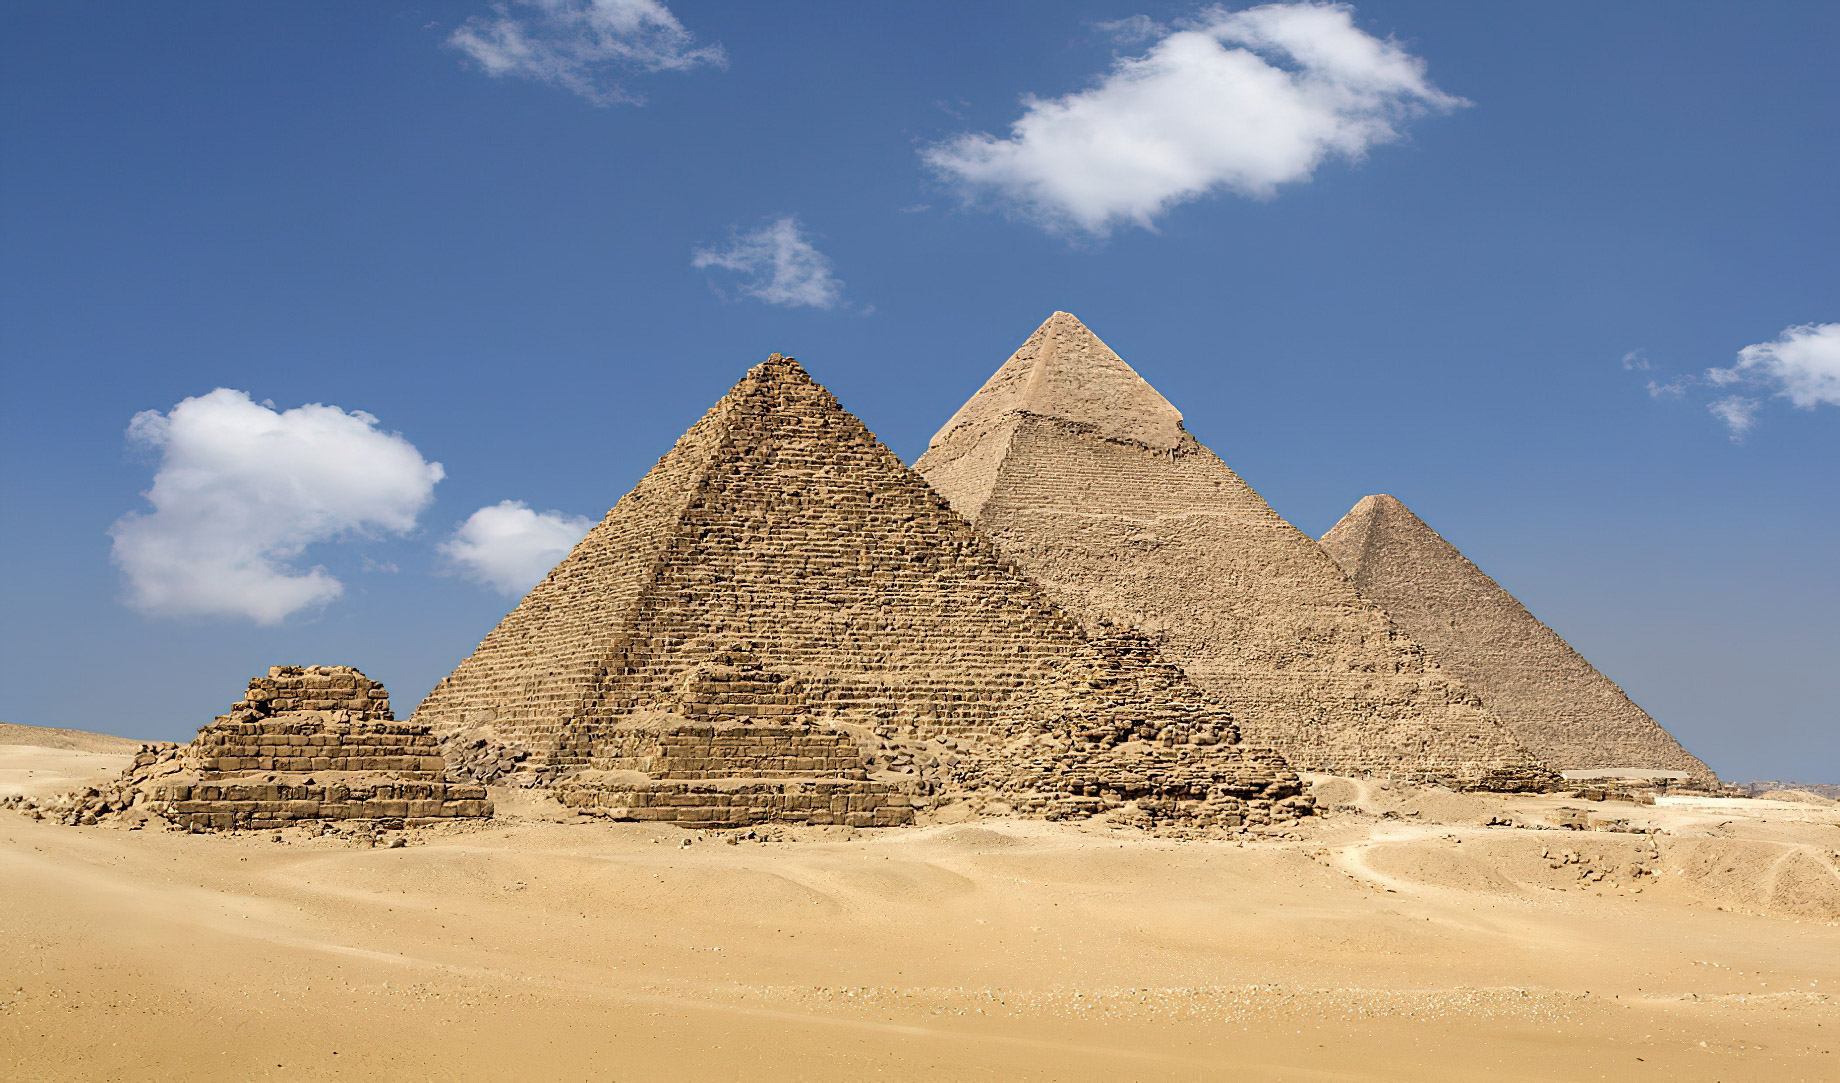 The Nile Ritz-Carlton, Cairo Hotel – Cairo, Egypt – The Great Pyramid of Giza